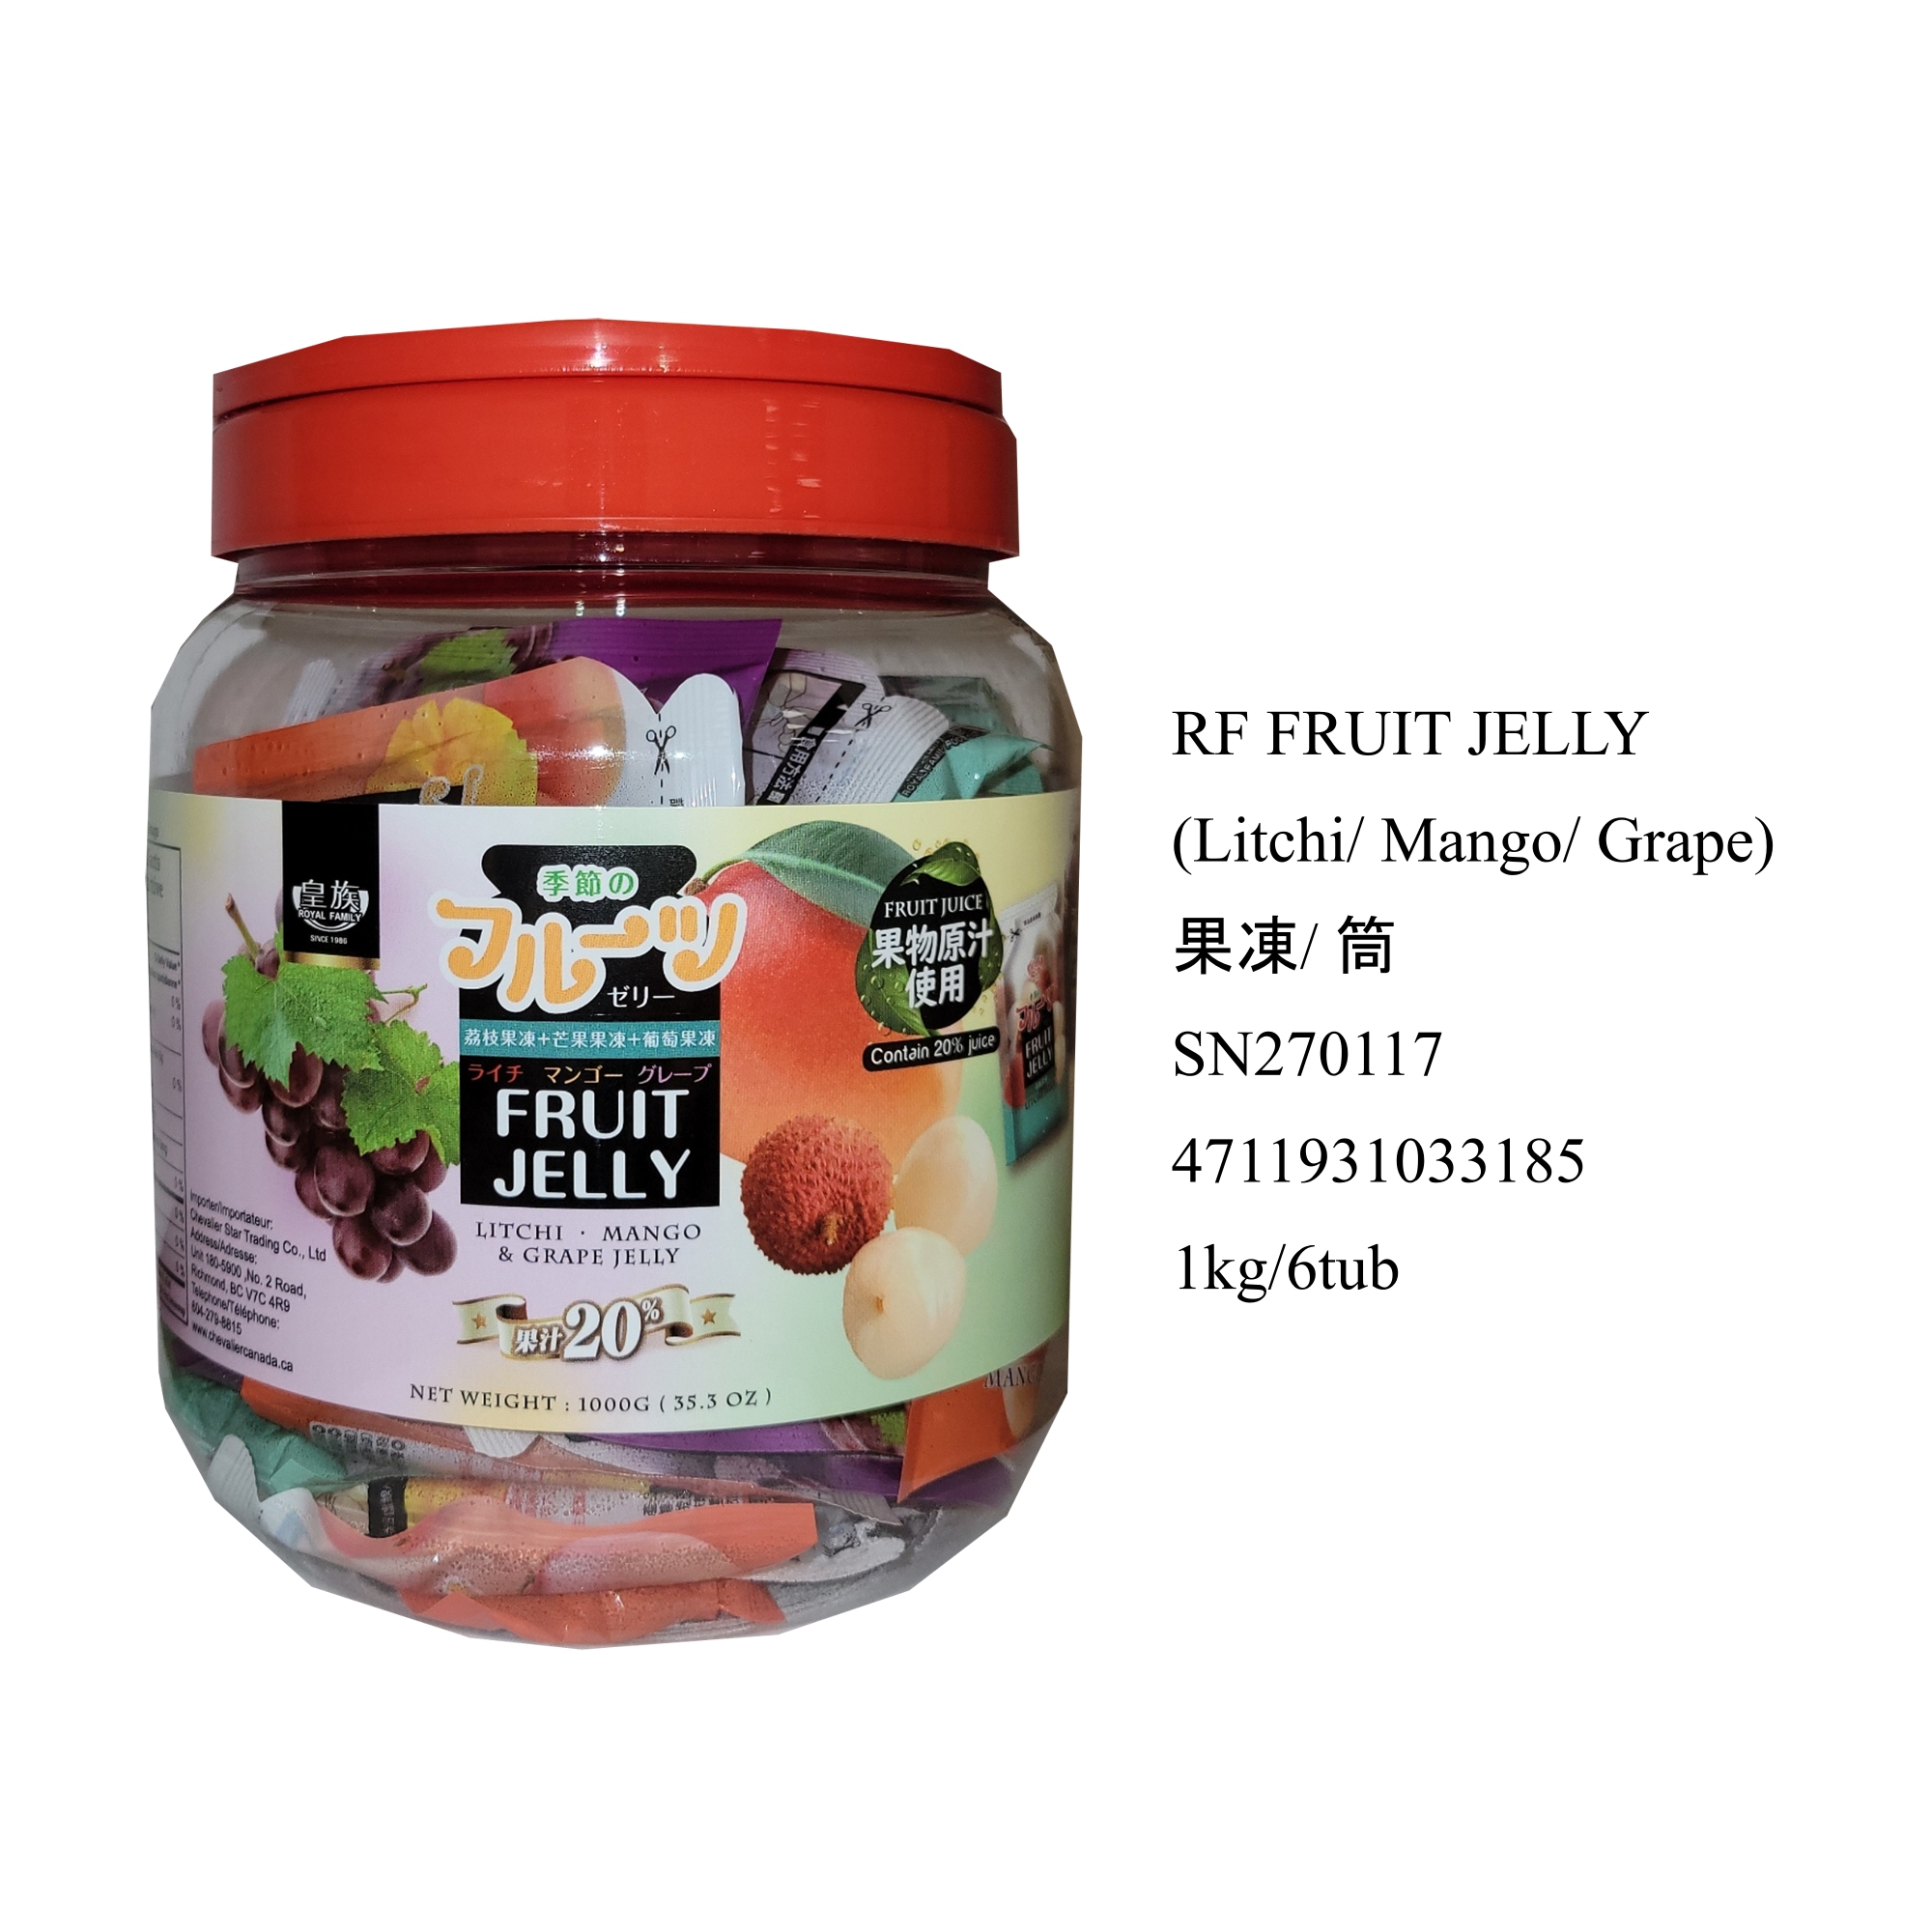 RF FRUIT JELLY (Litchi/ Mango/ Grape) SN270117